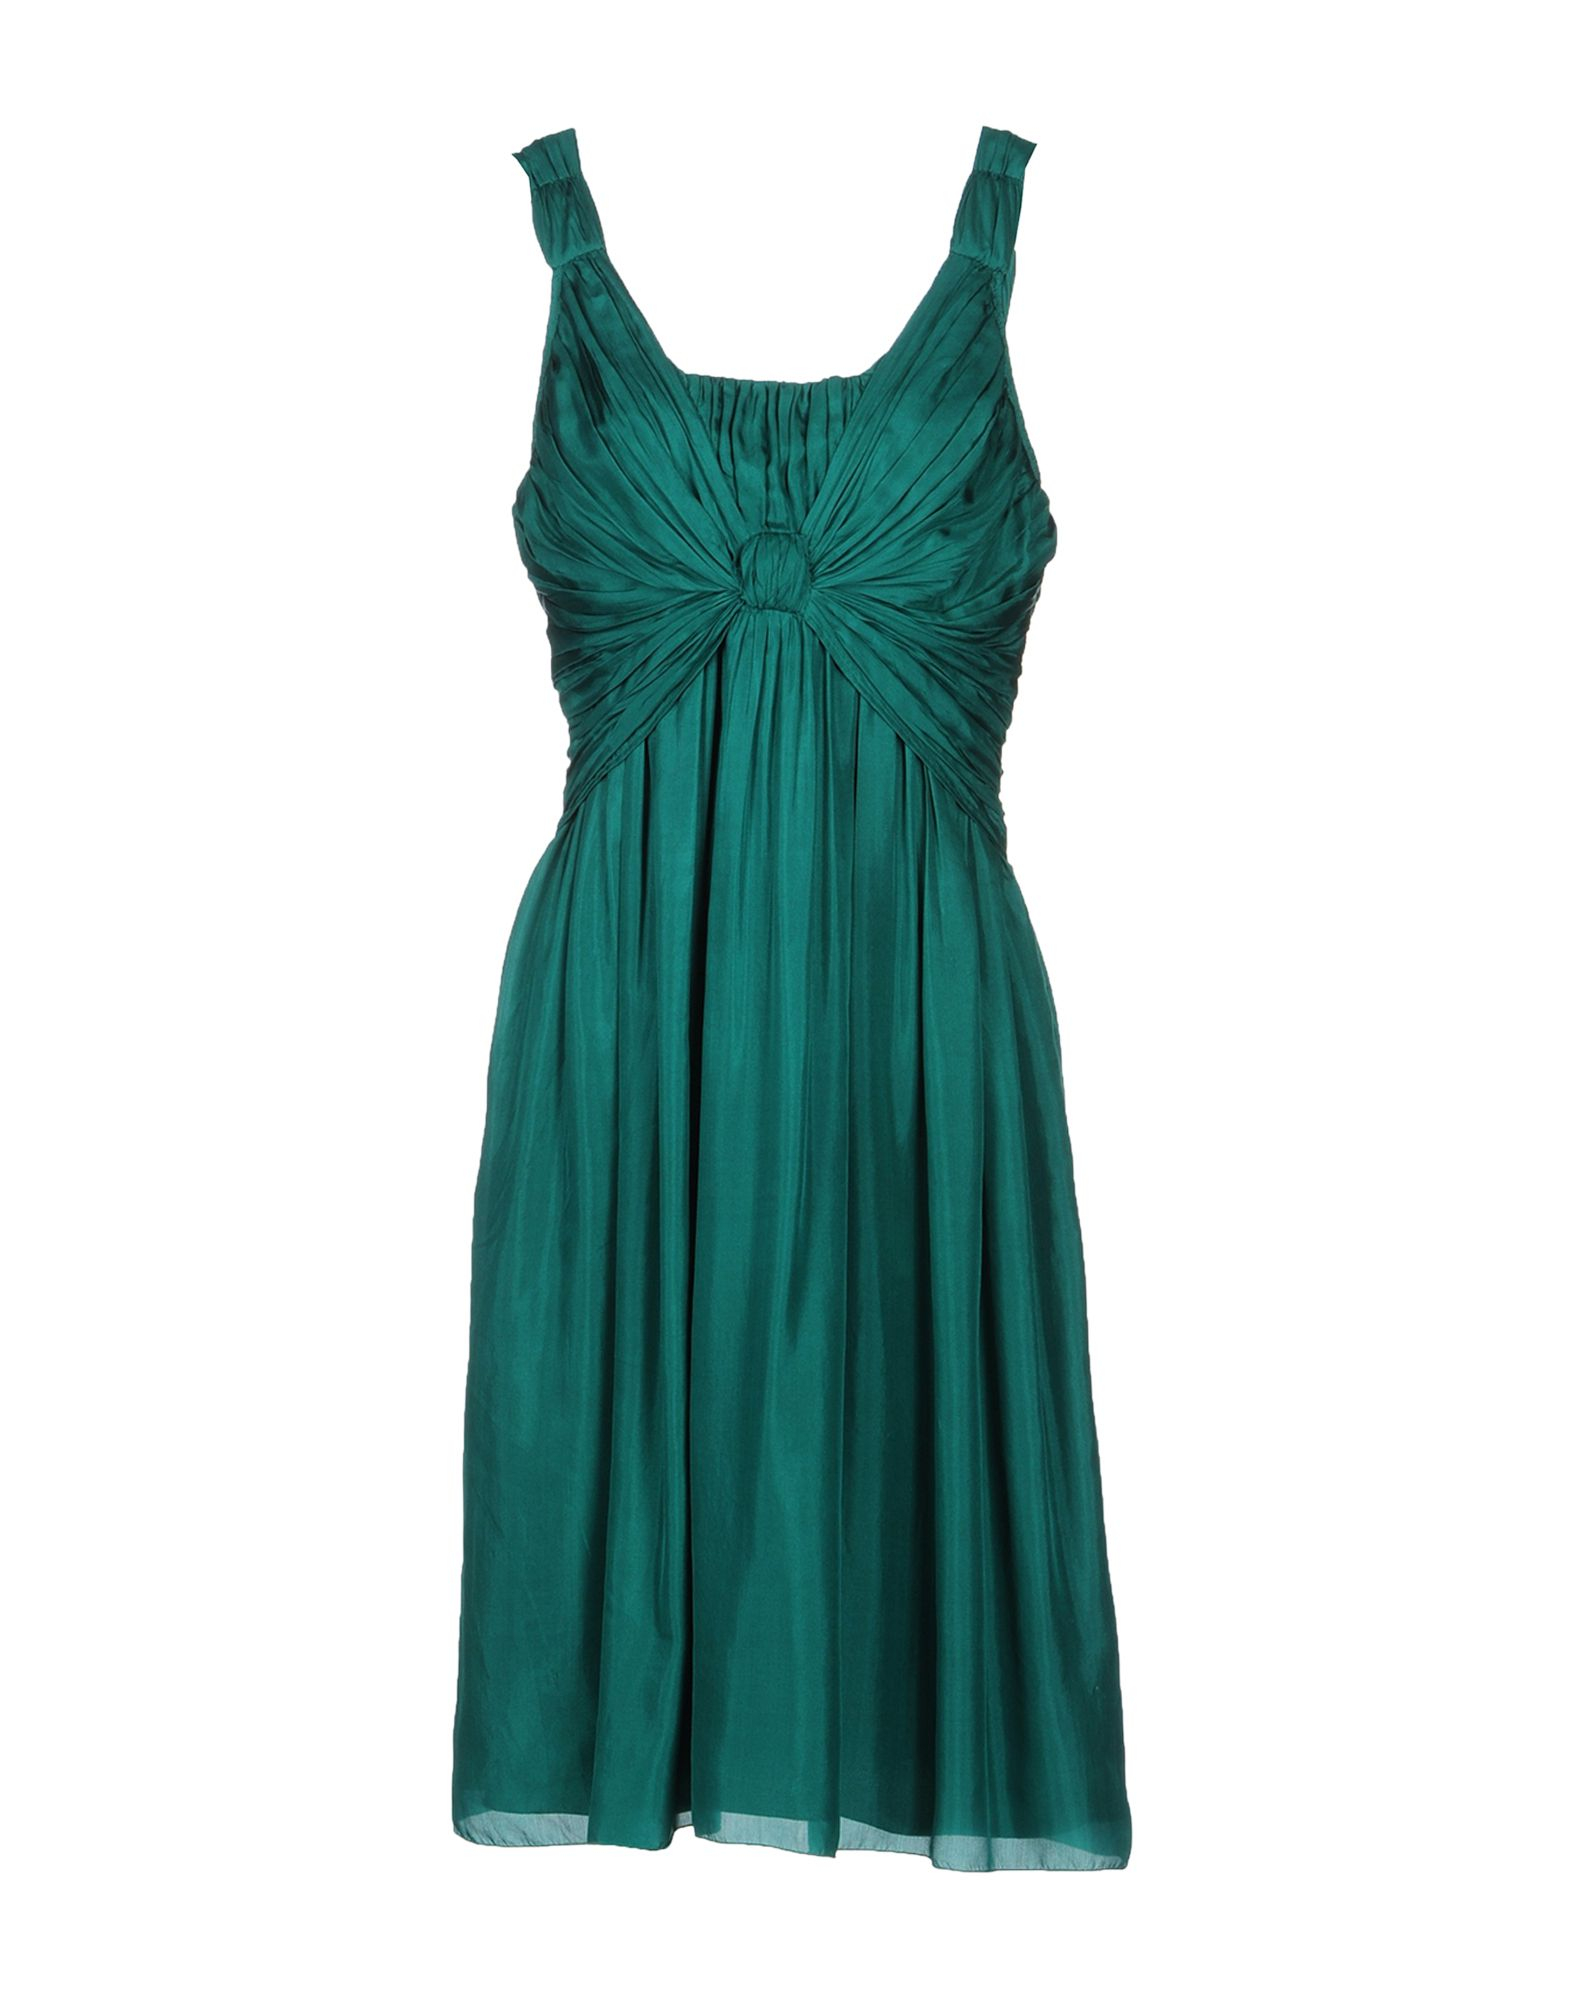 Hoss Intropia Kneelength Dress in Green (Emerald green) | Lyst